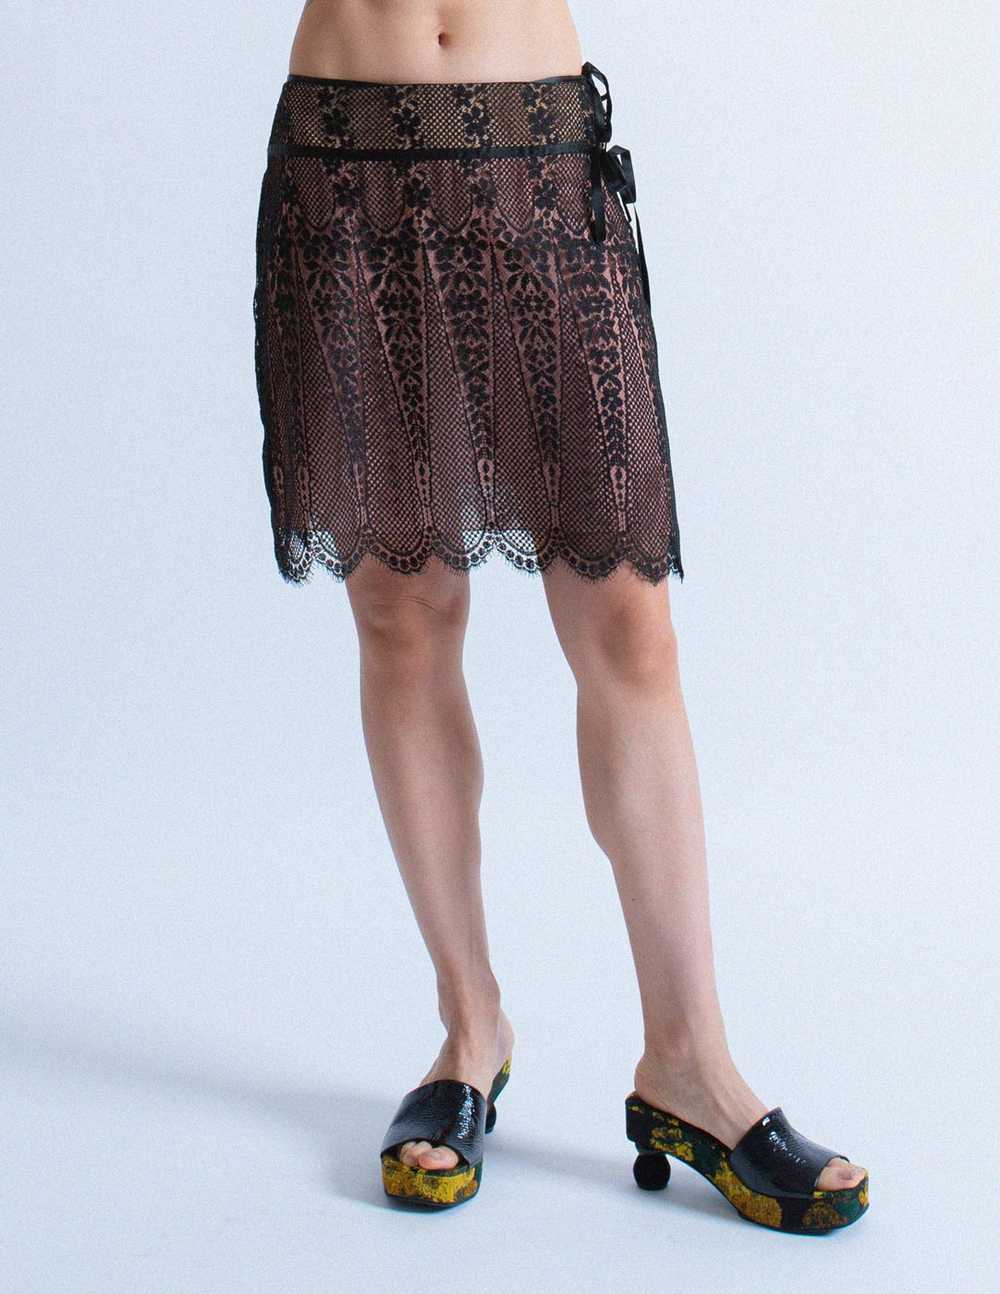 Blumarine lace skirt with ties - image 5